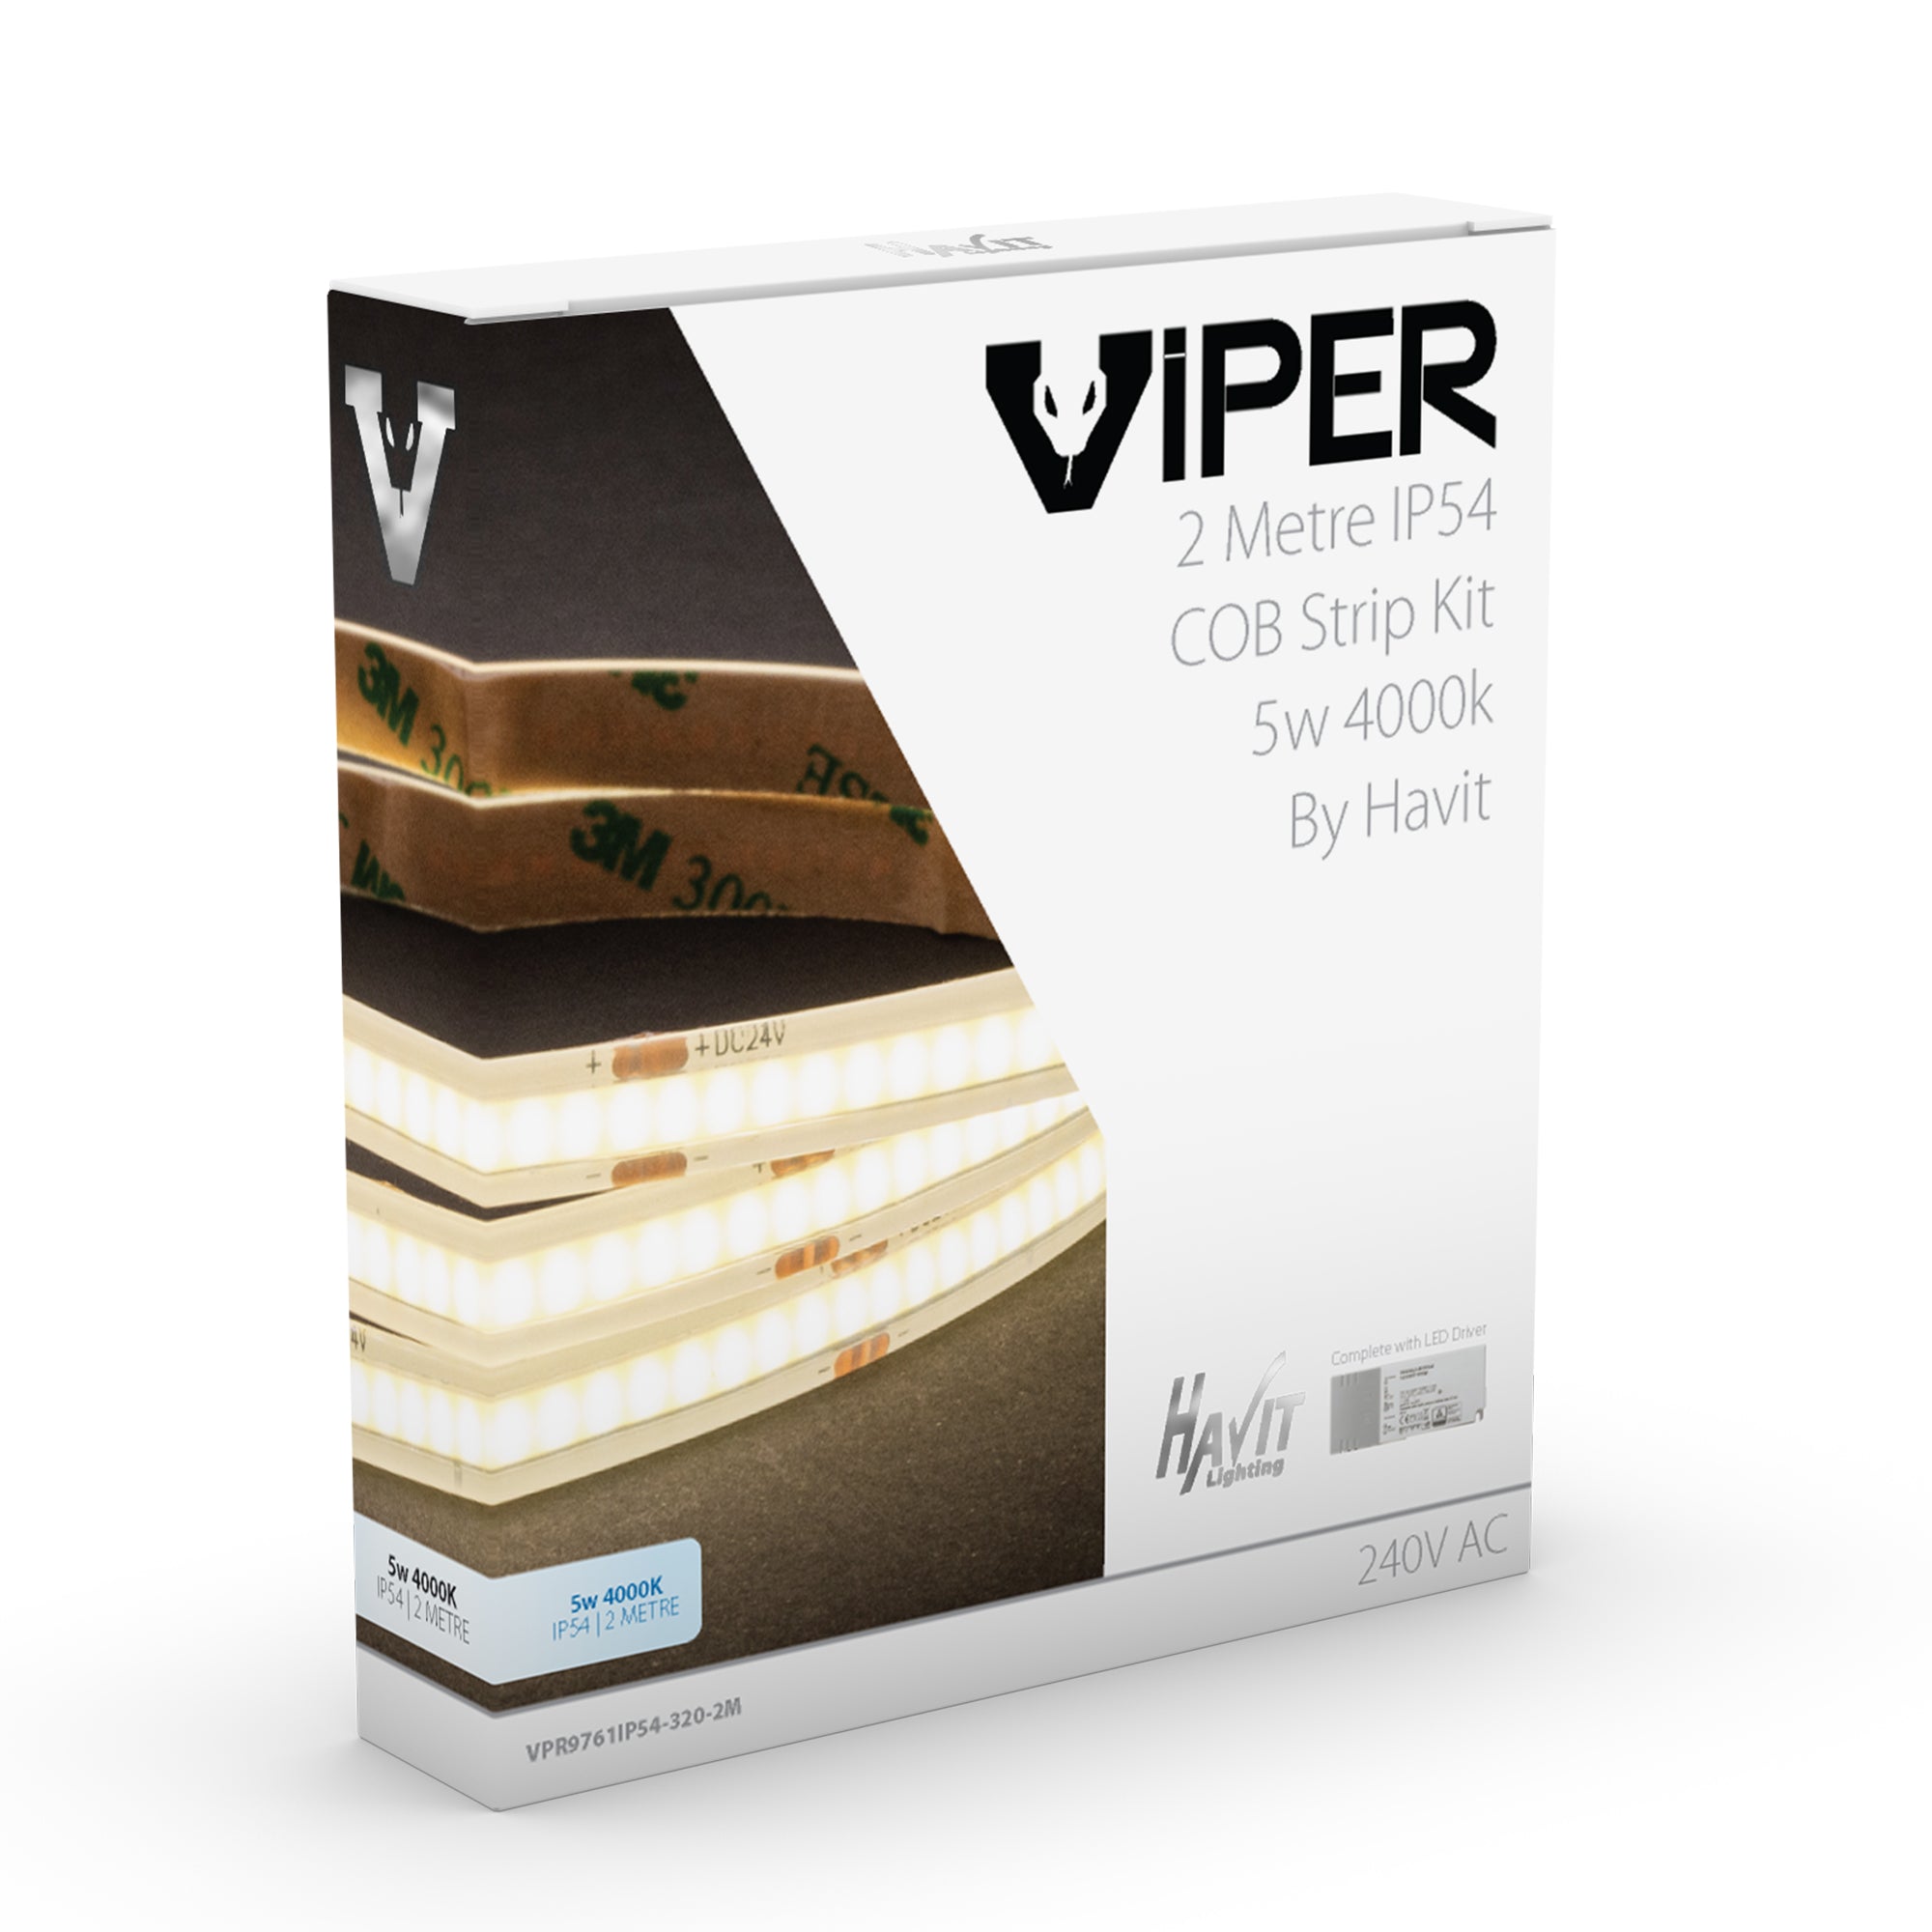 VPR9761IP54-320-2M - Viper COB 5w Per Metre 2m LED Strip kit 4000k